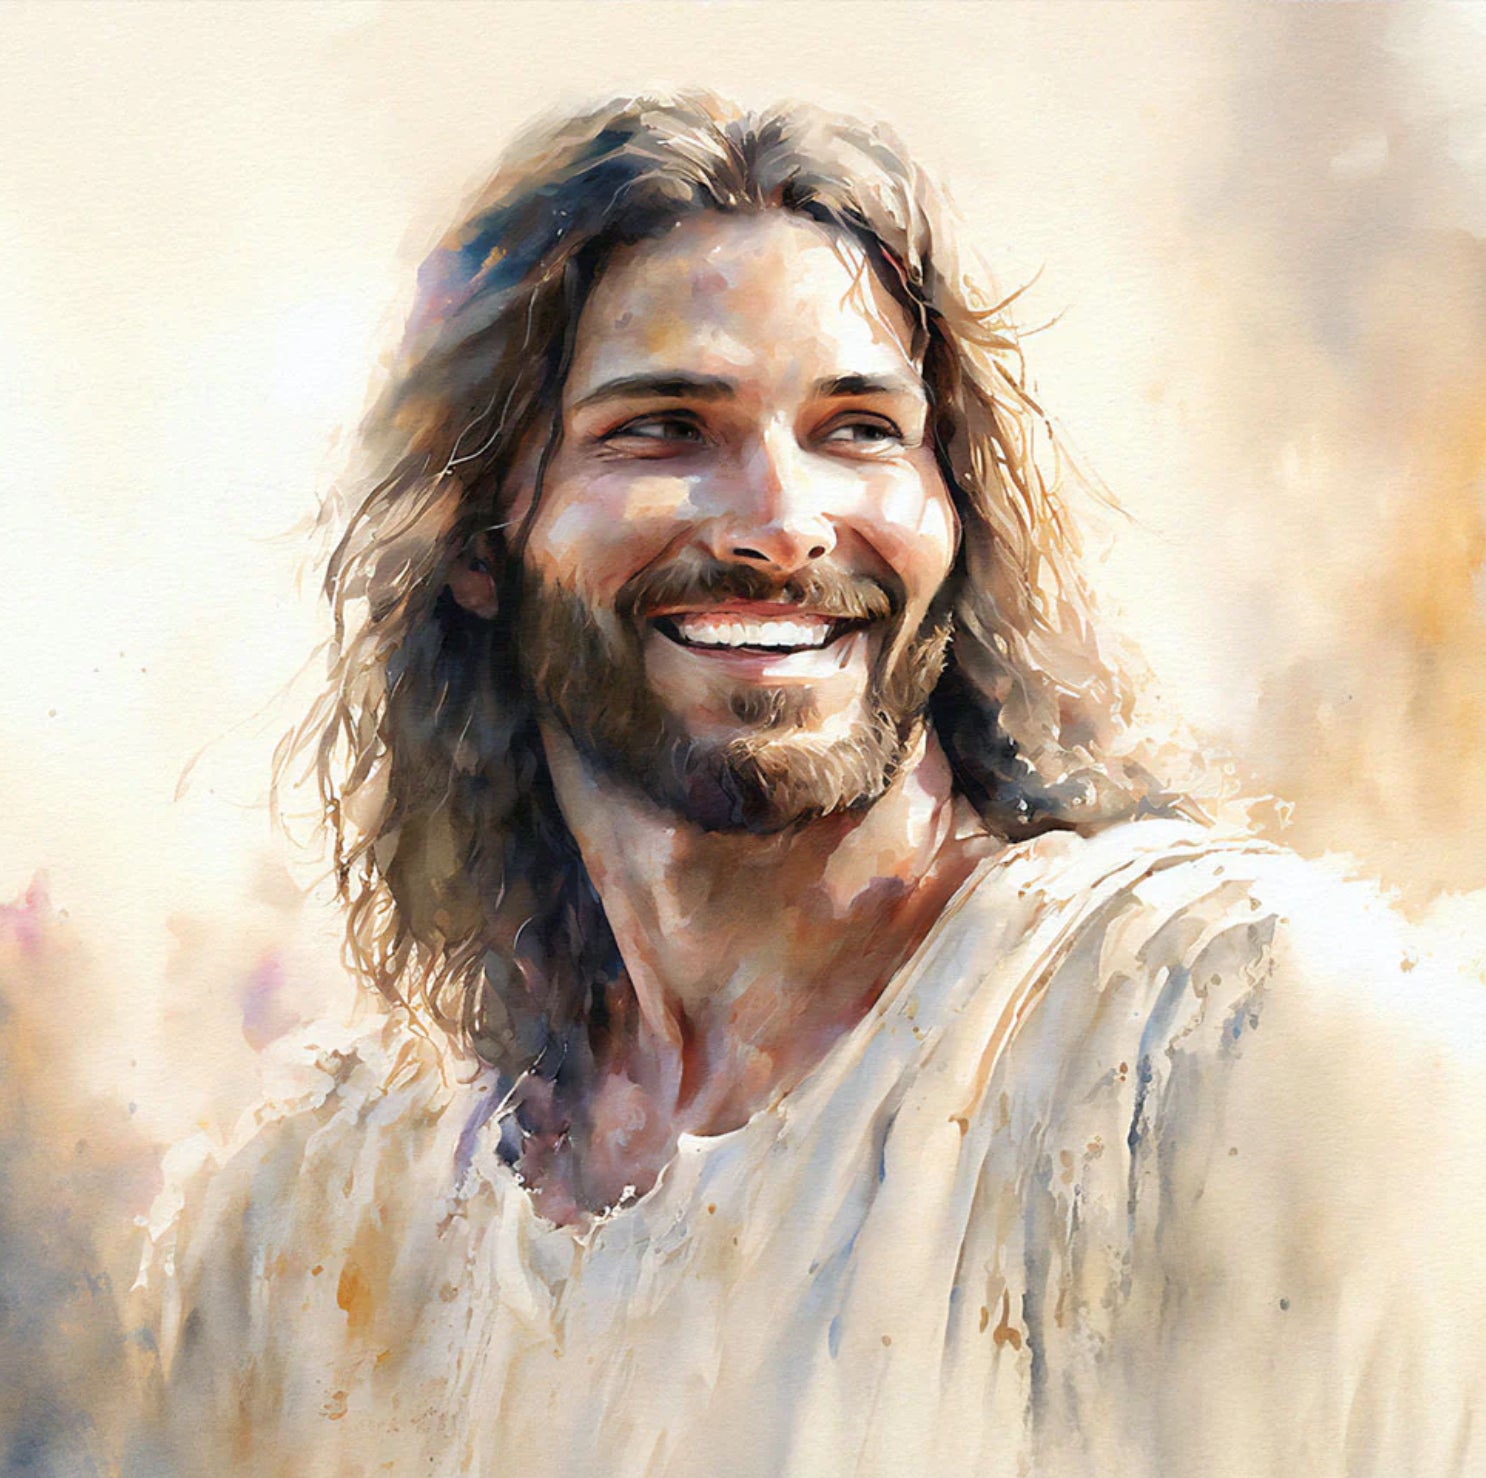 IMAGES OF <br> JESUS